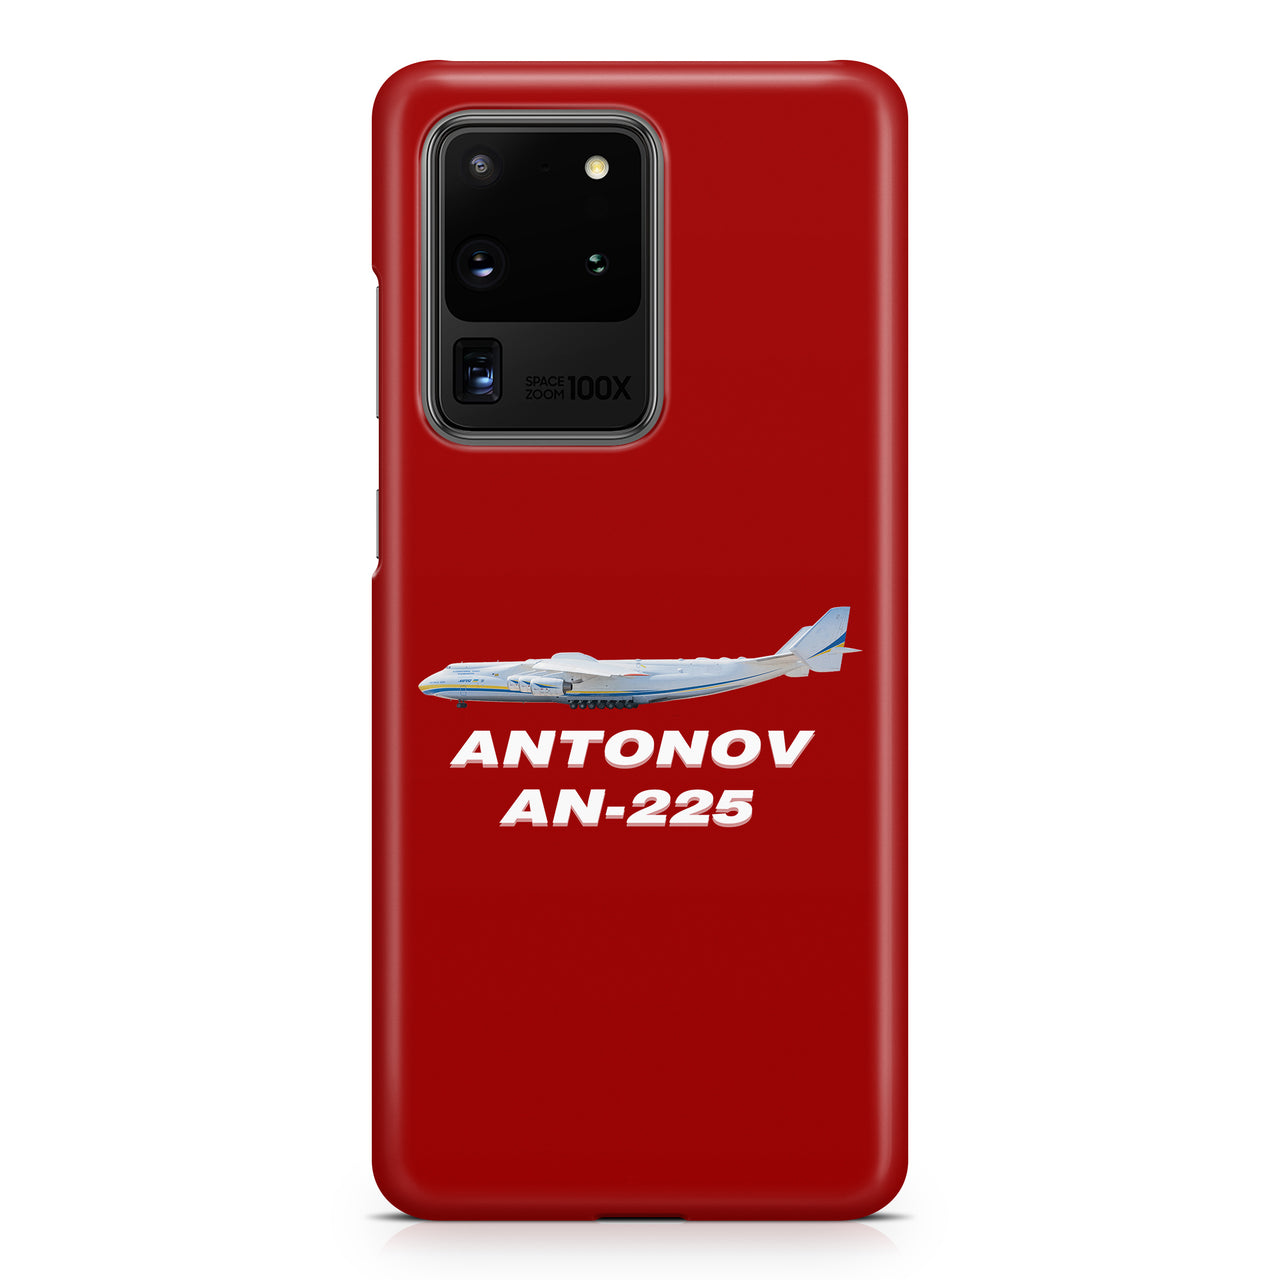 The Antonov AN-225 Samsung S & Note Cases